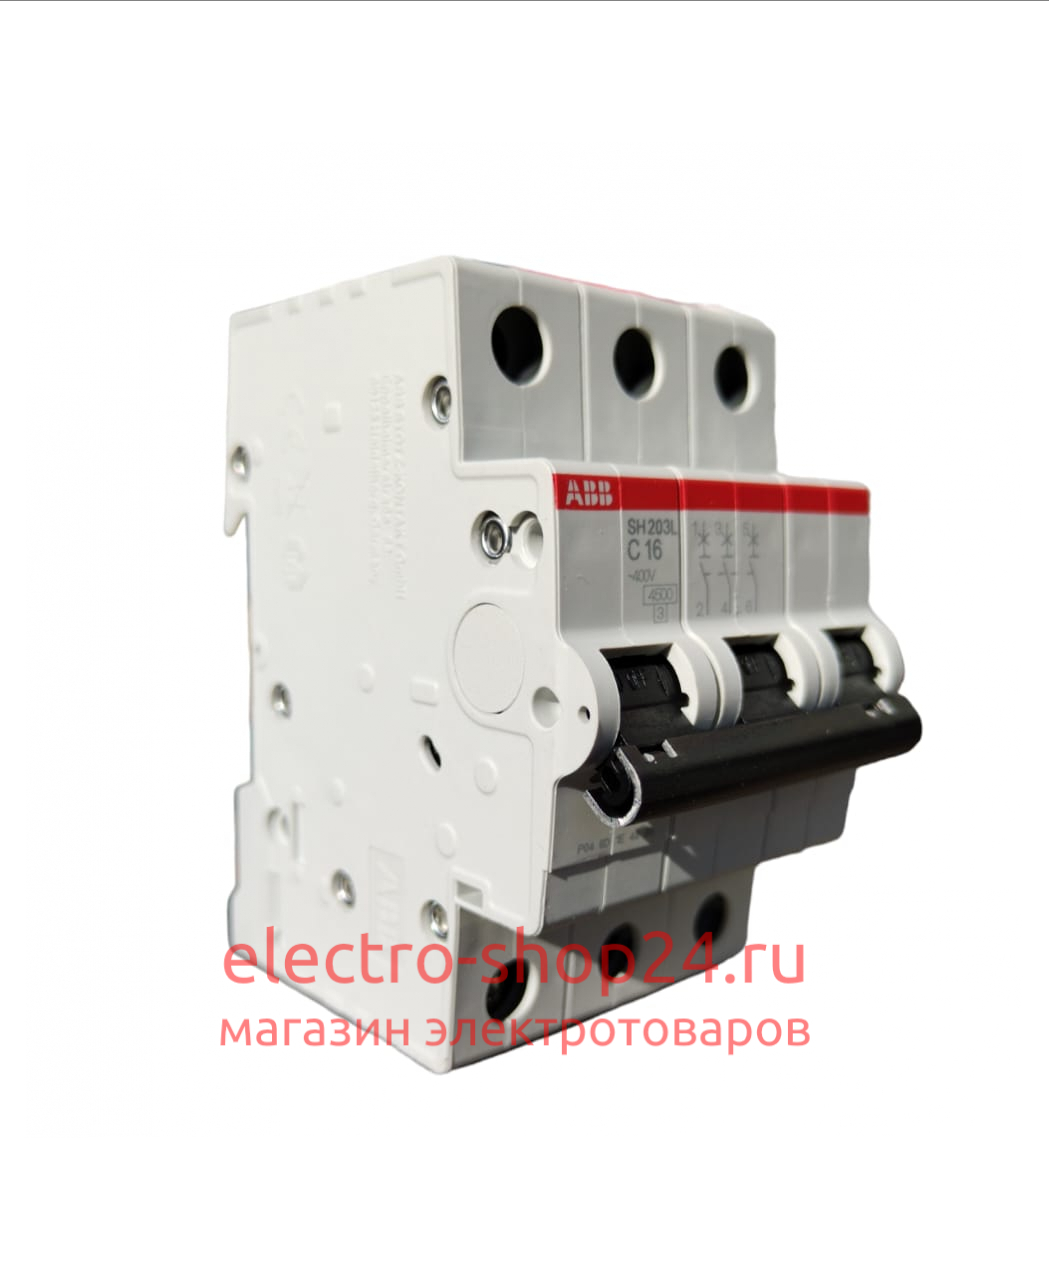 SH203L C16 Автоматический выключатель 3-полюсный 16А 4,5кА (хар-ка C) ABB 2CDS243001R0164 2CDS243001R0164 - магазин электротехники Electroshop